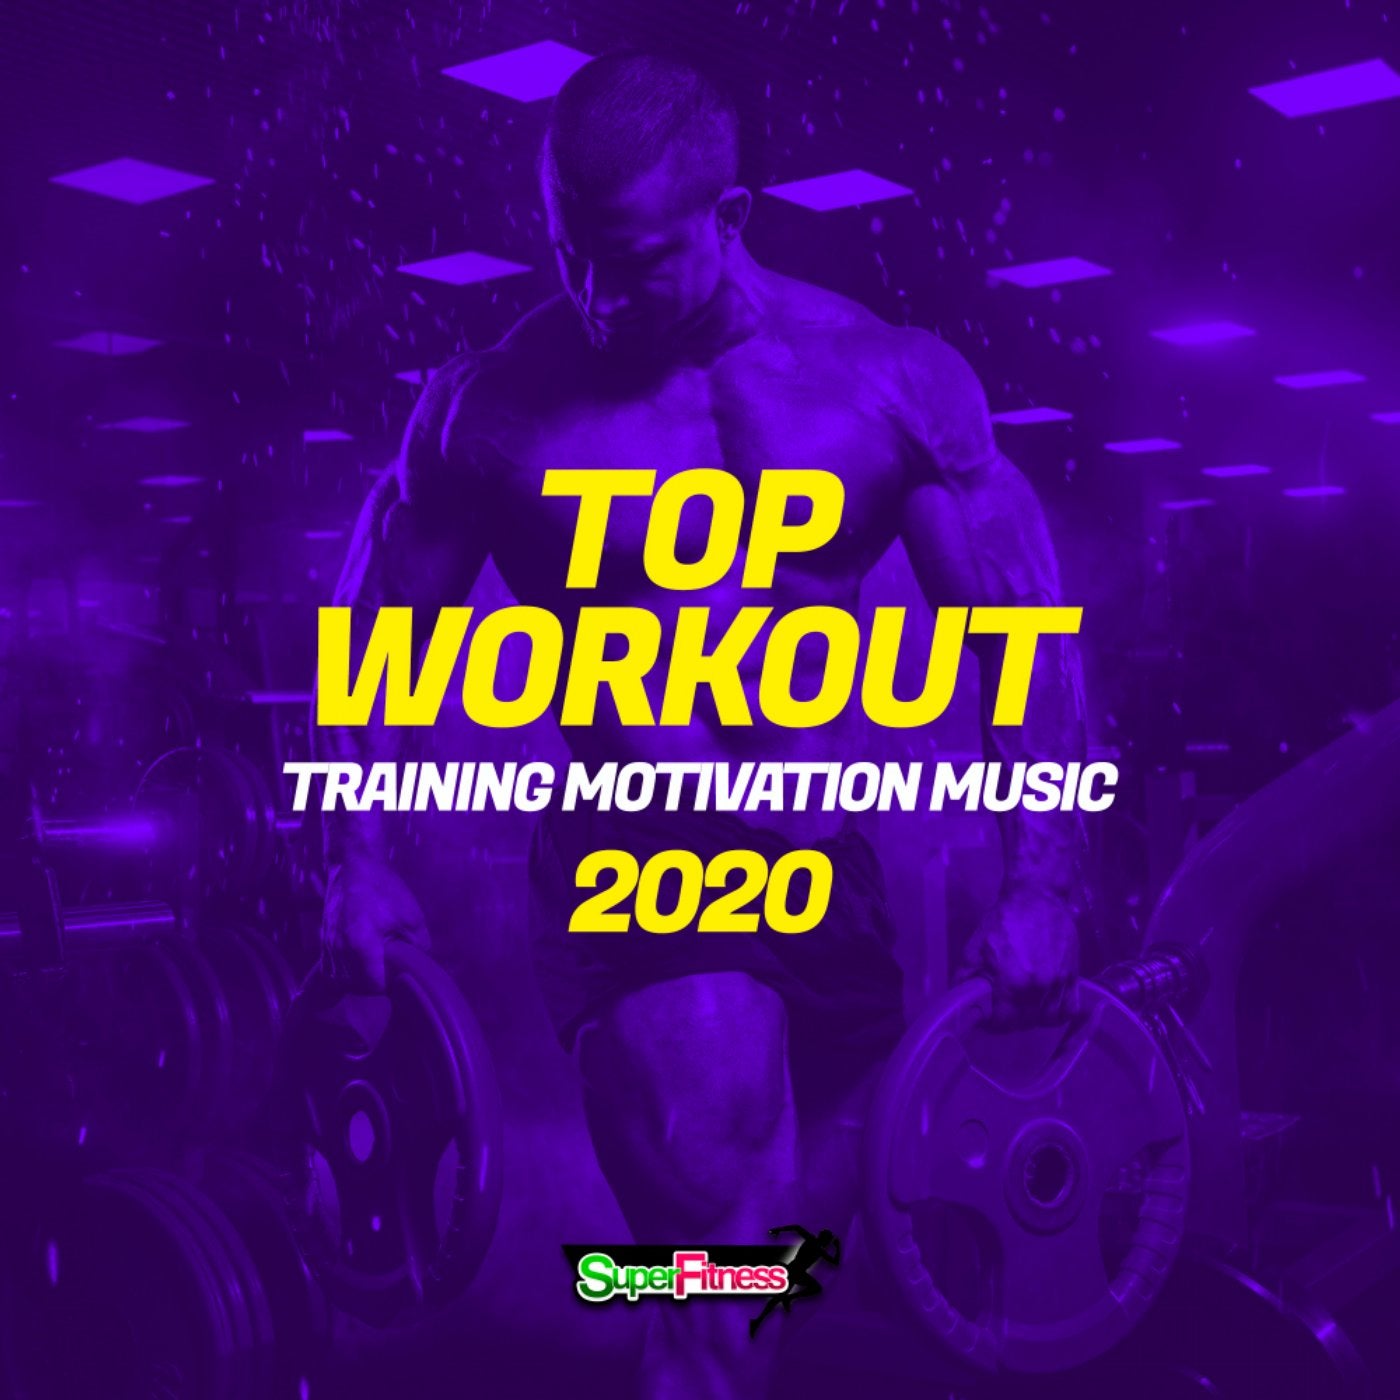 Top Workout: Training Motivation Music 2020